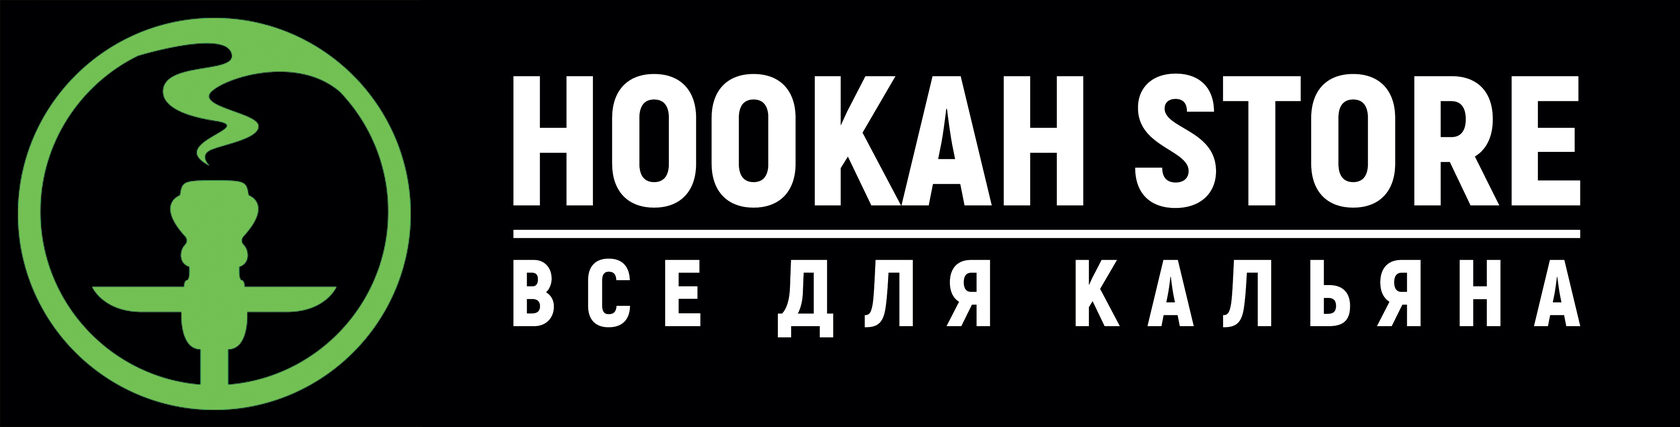 Логотип hookah store